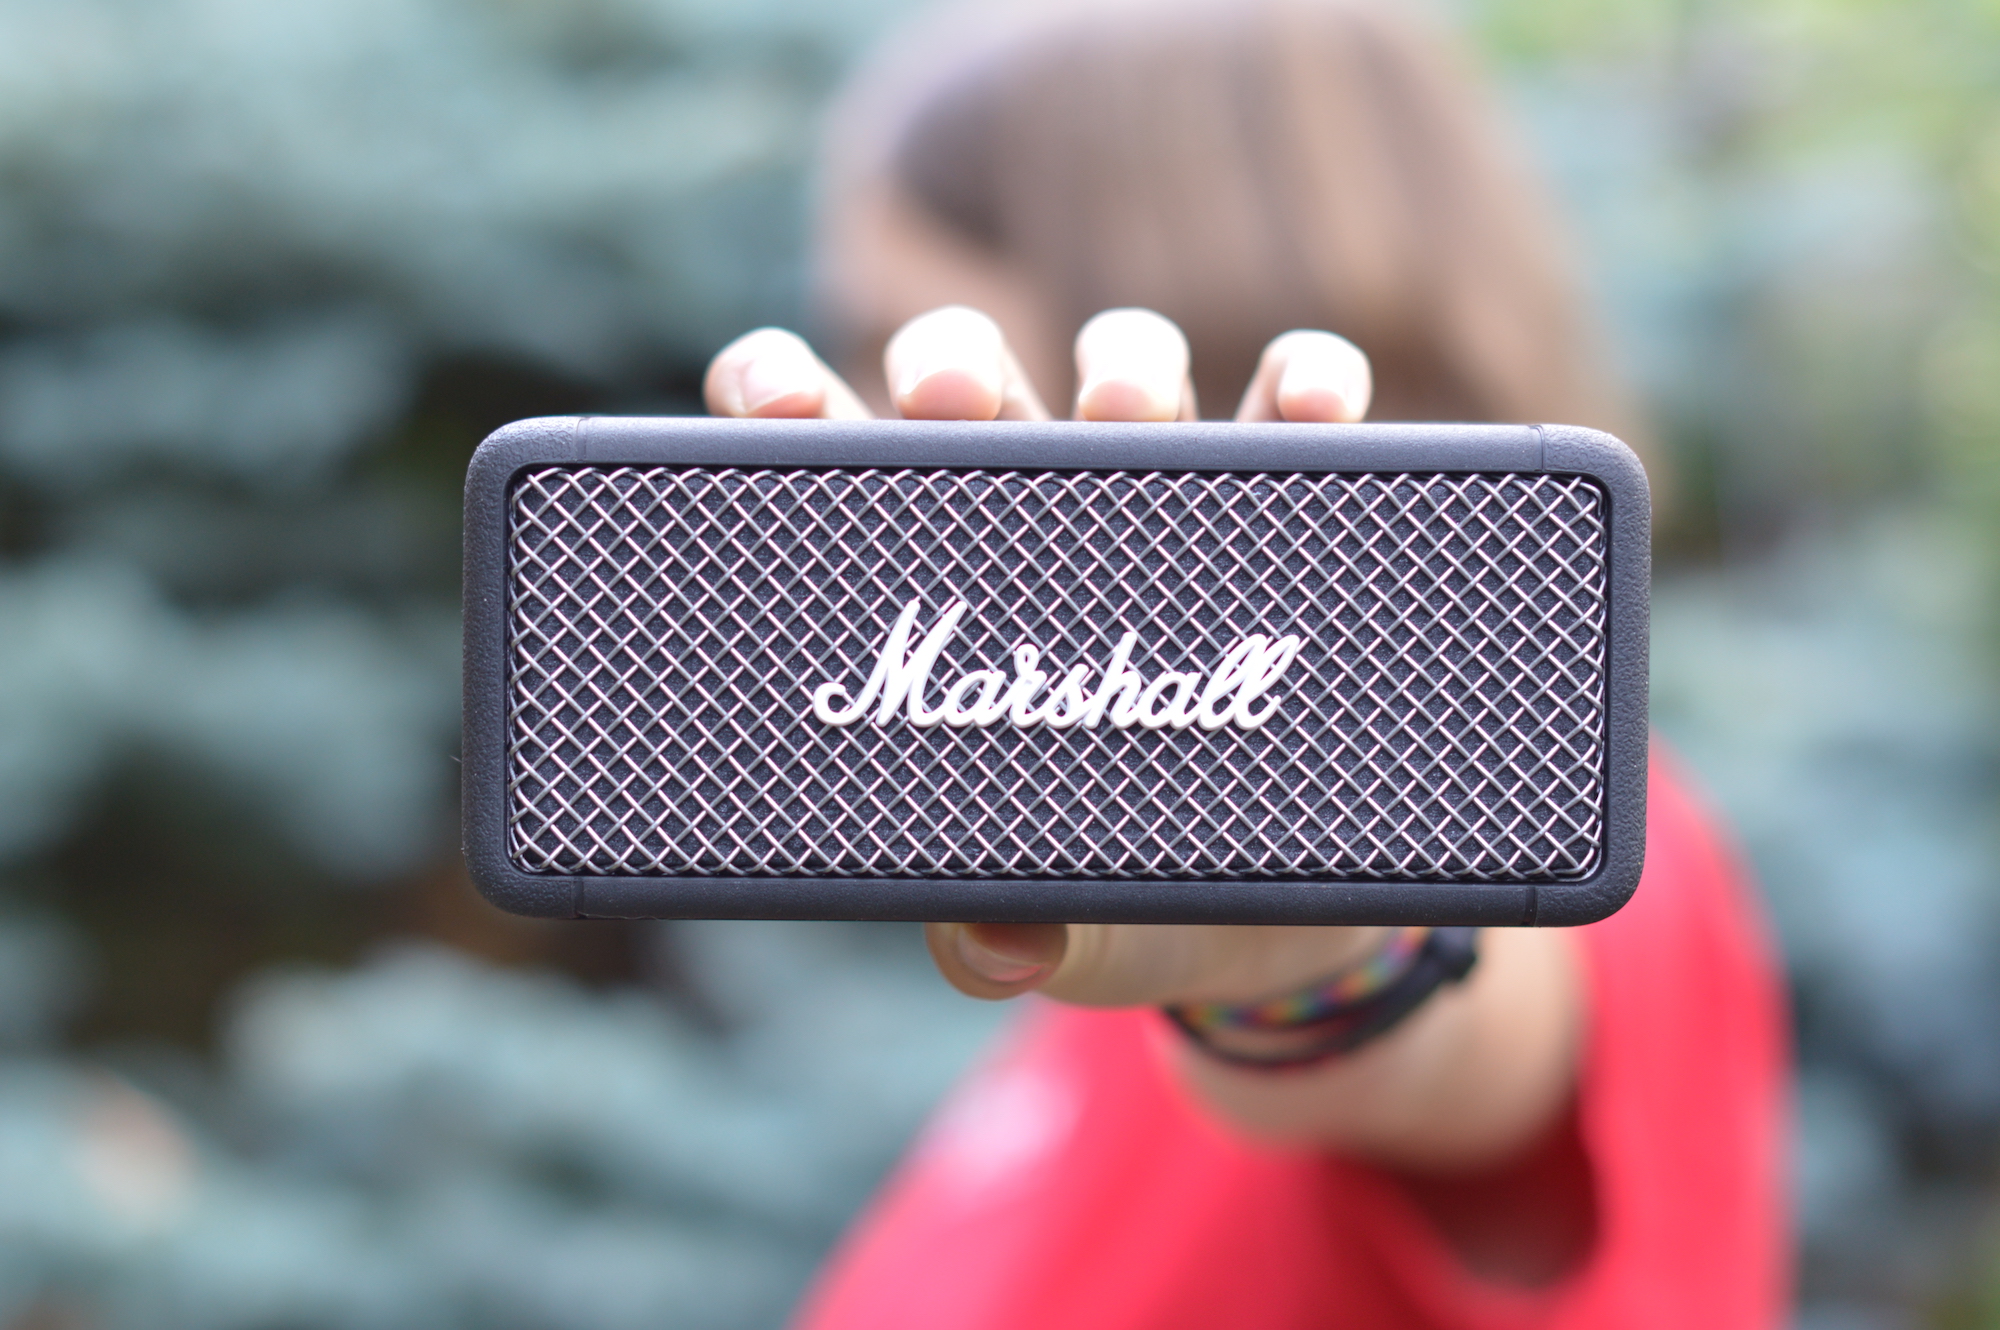 Marshall Emberton Portable Bluetooth Speaker - Black at best price